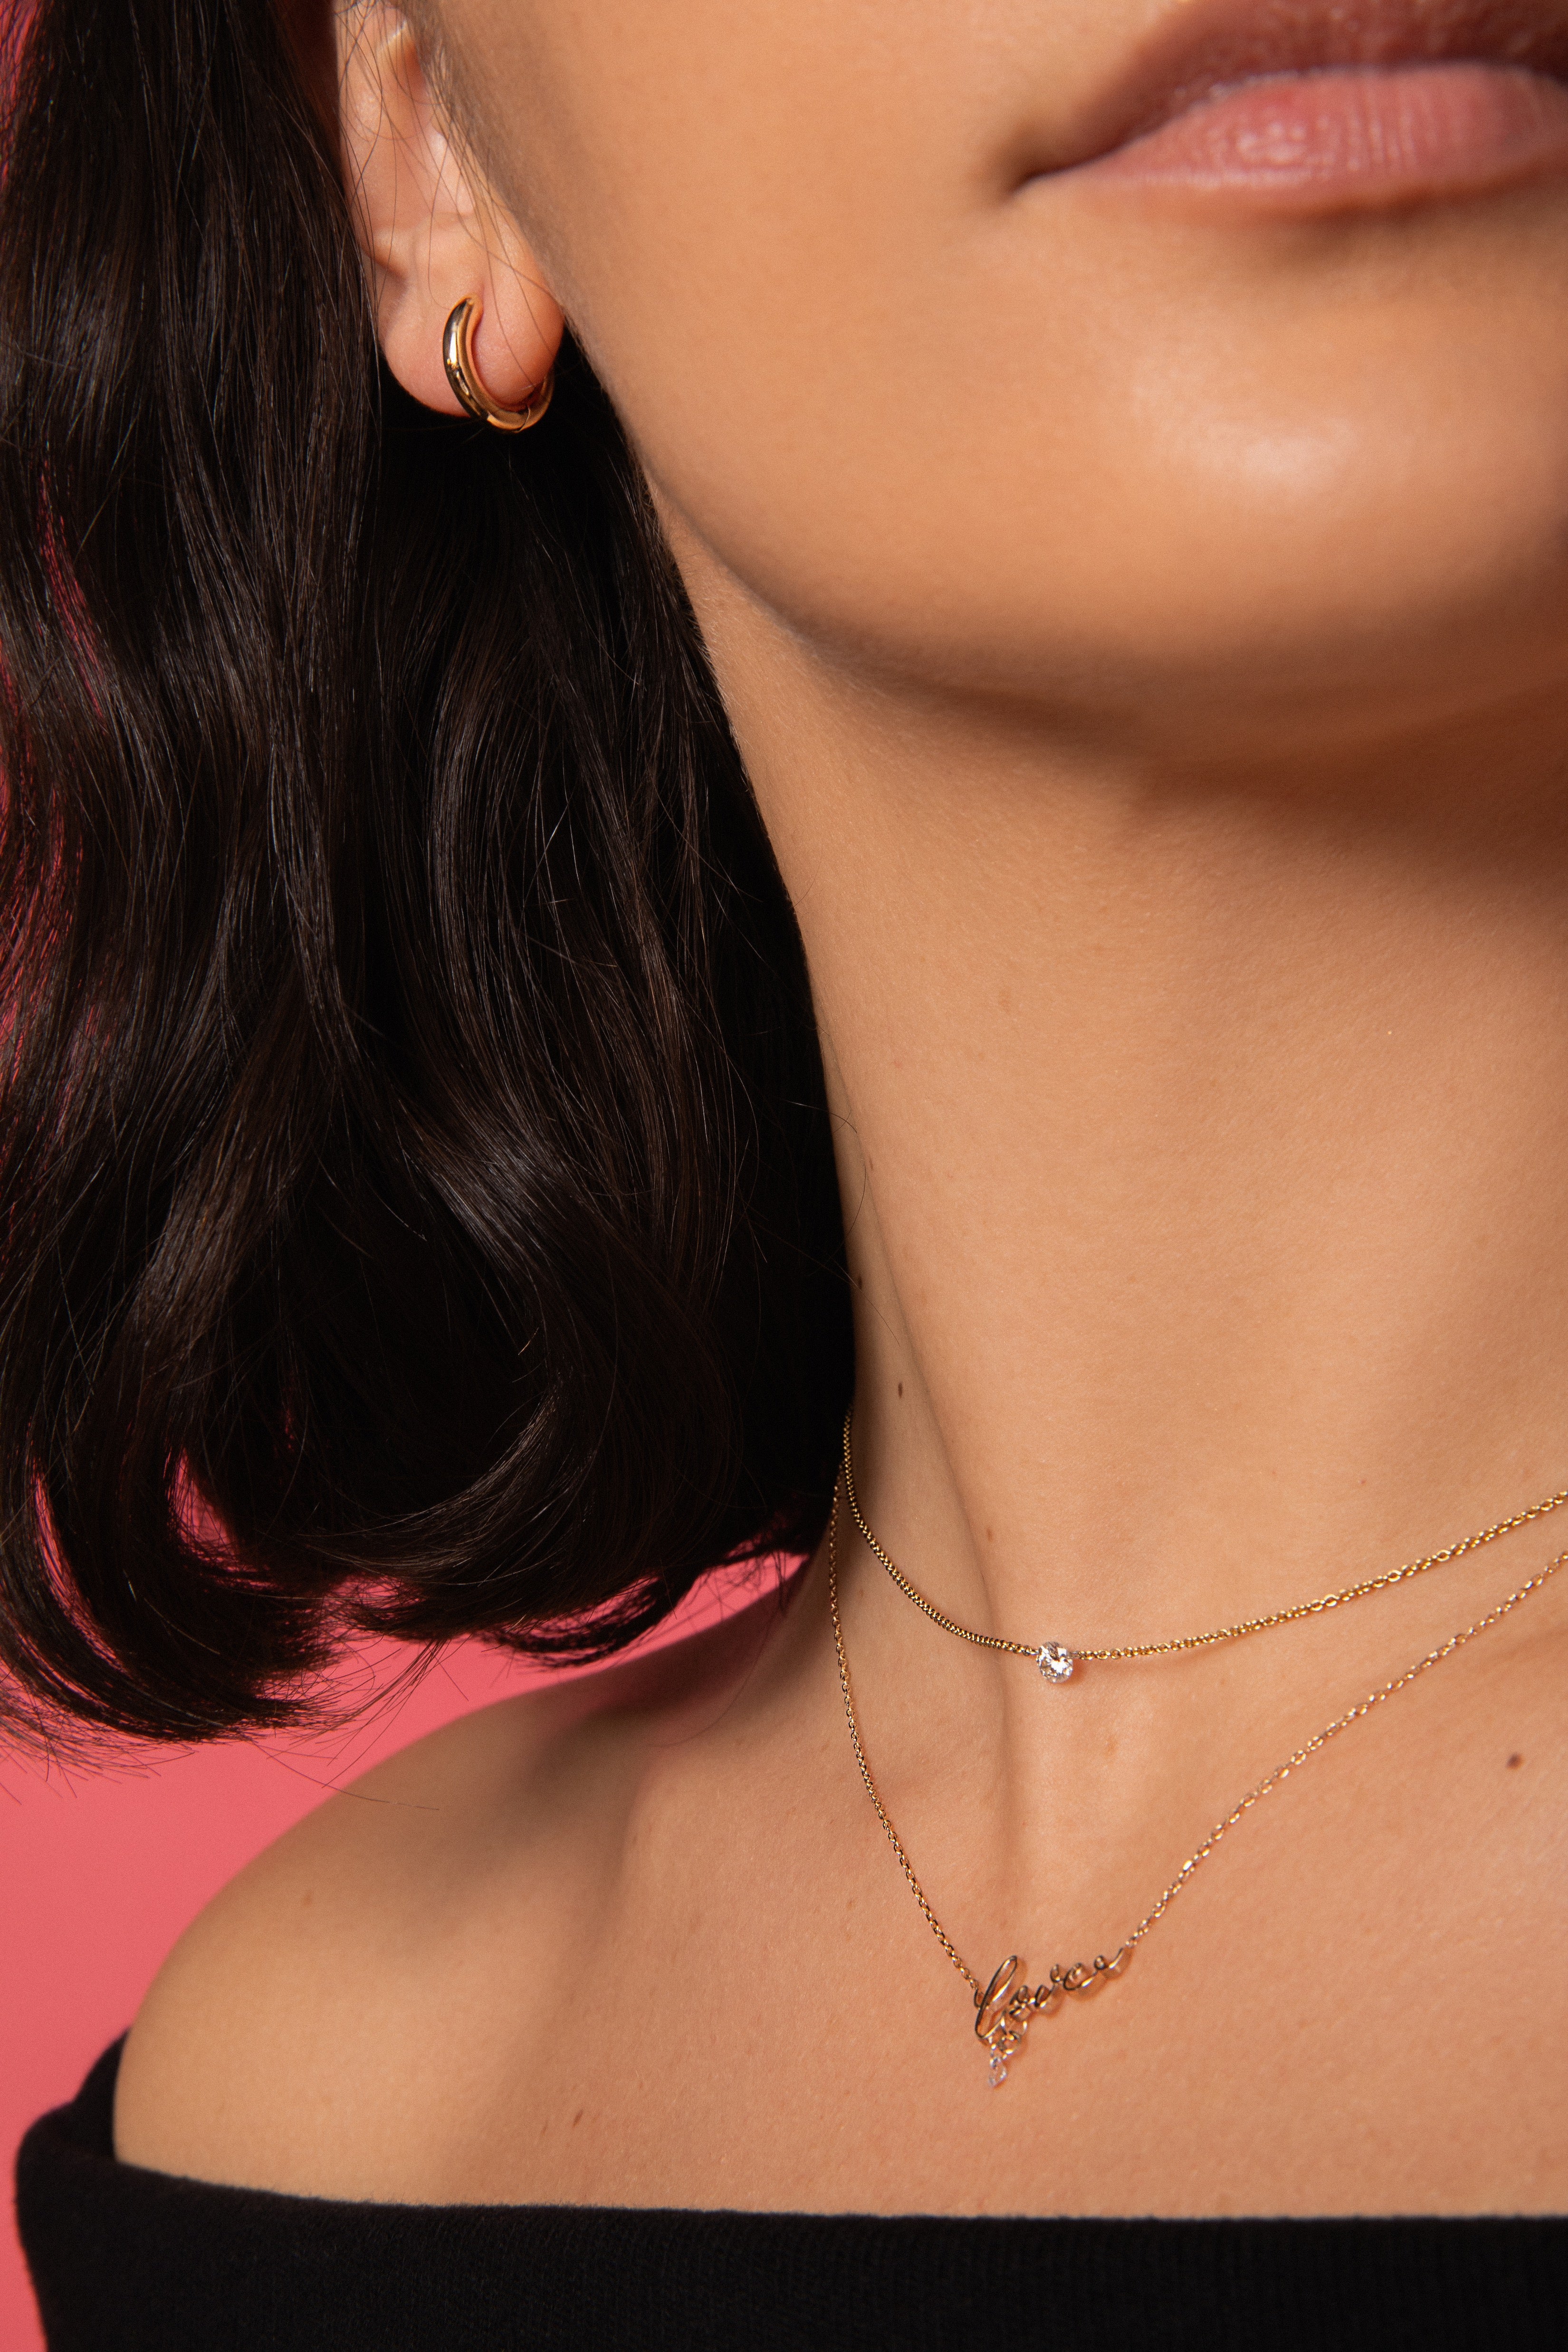 Pierced Diamond Necklace